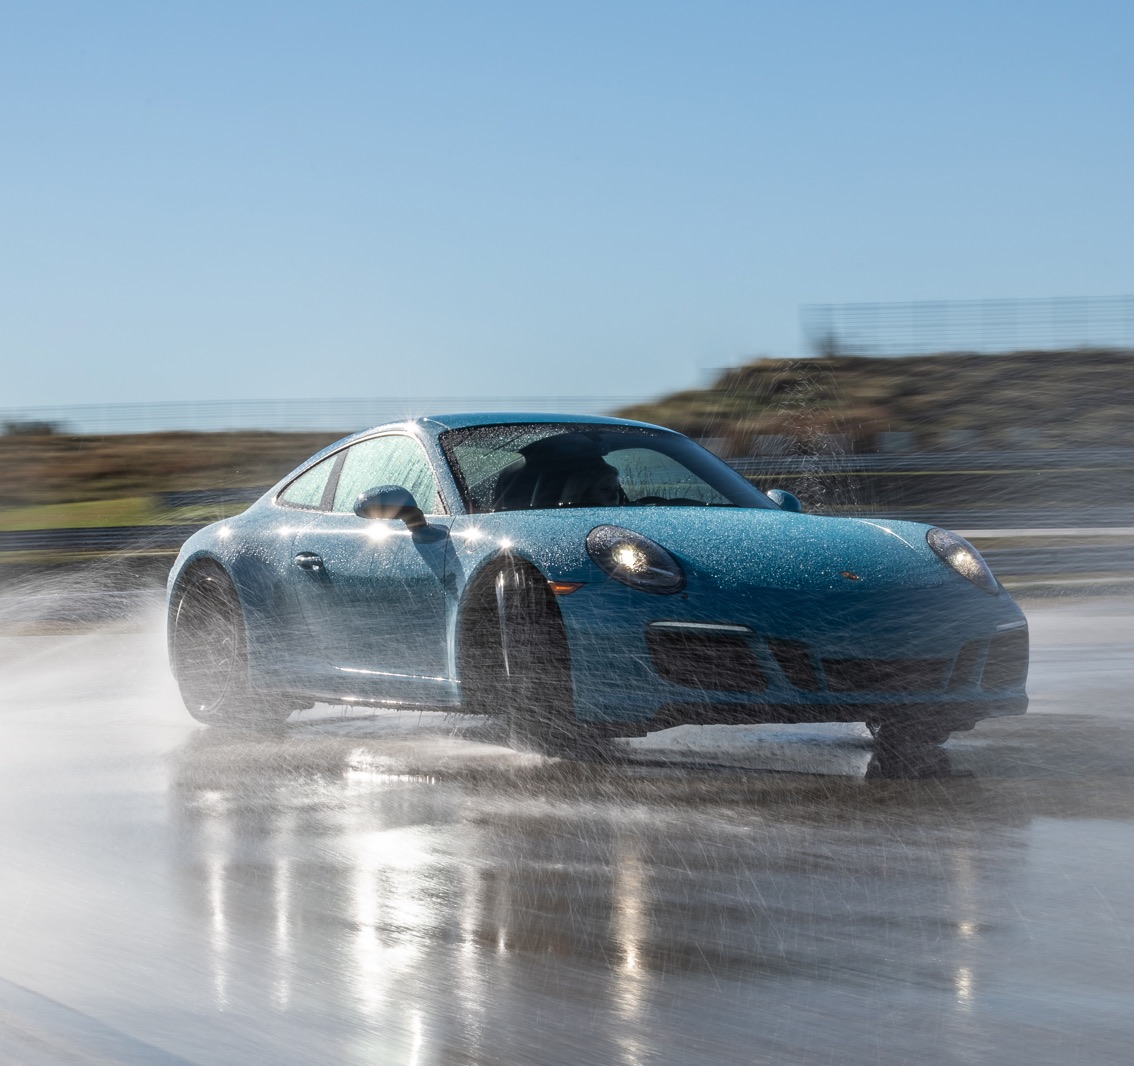 Porsche driving experience